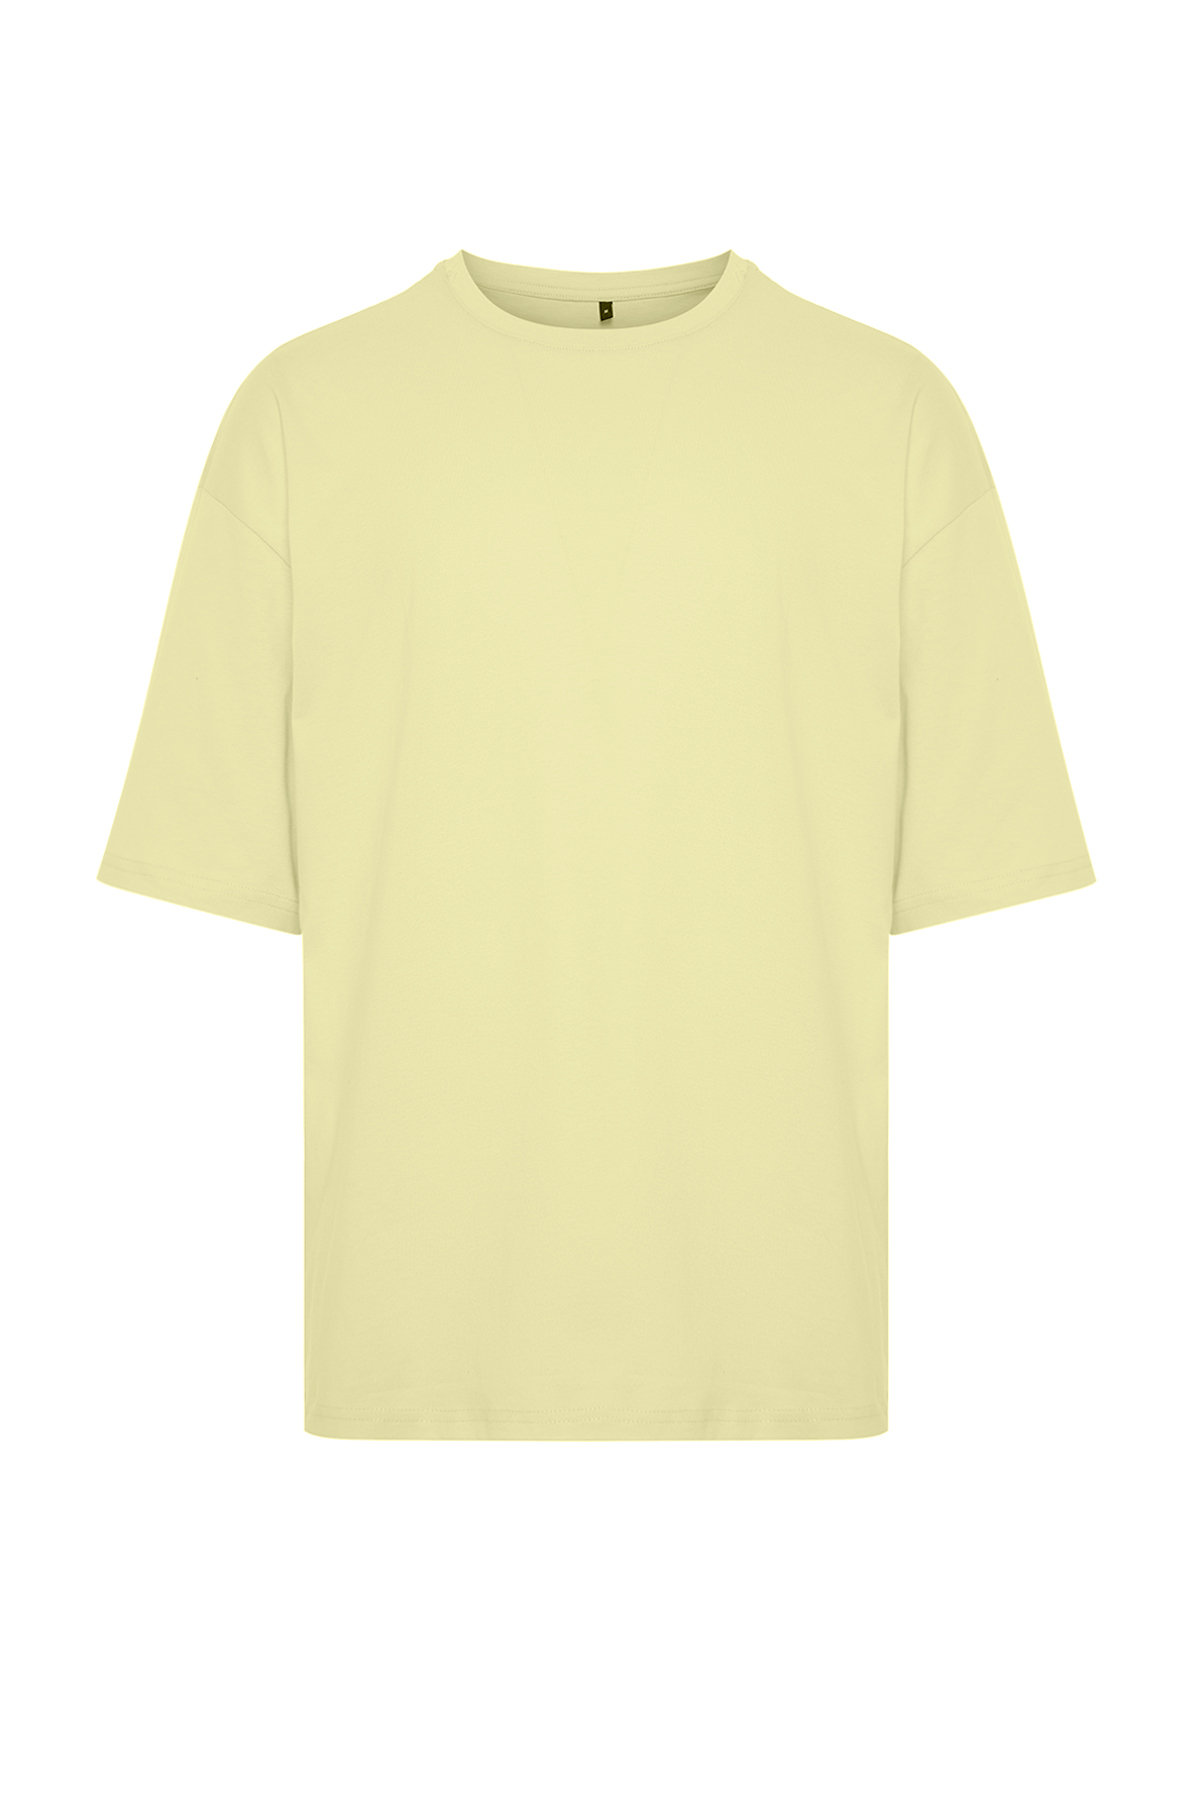 Trendyol Men's Yellow Oversize/Wide-Fit Basic 100% Cotton T-Shirt